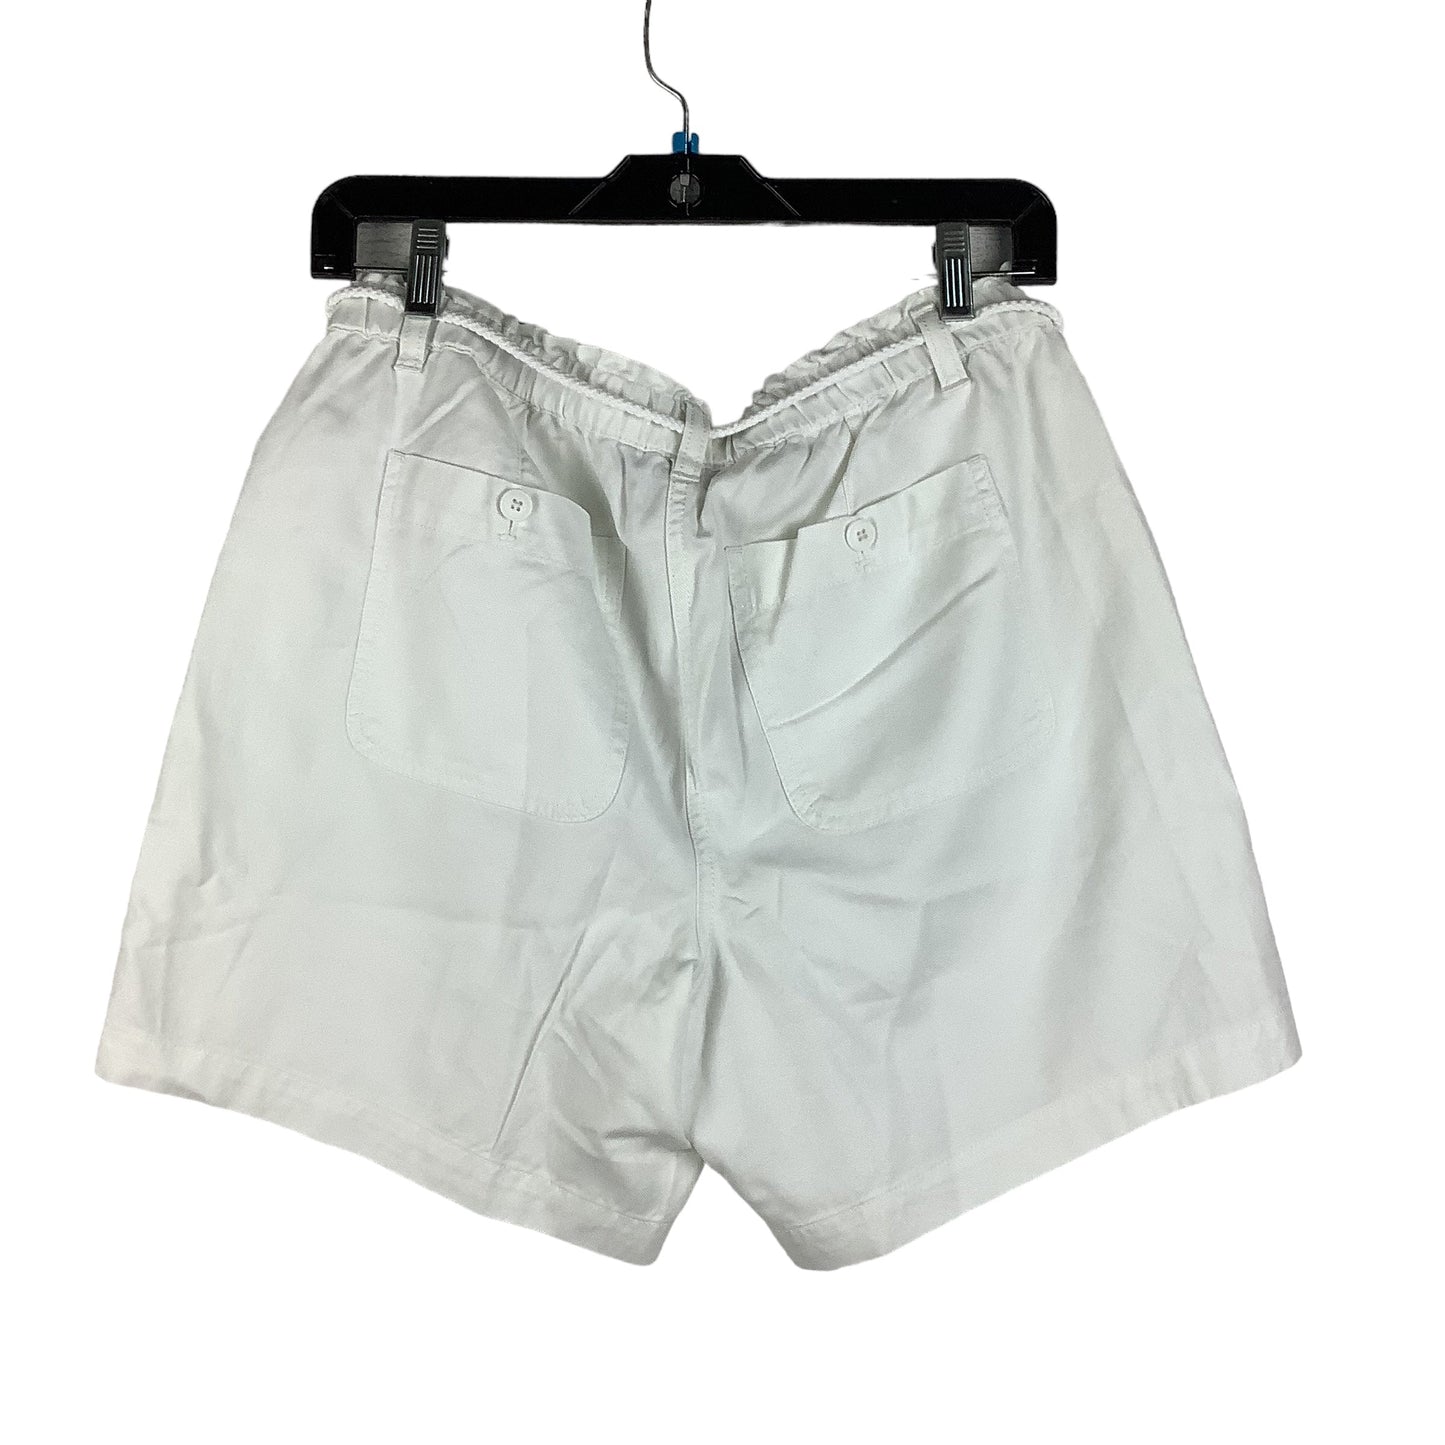 White Shorts Talbots, Size S